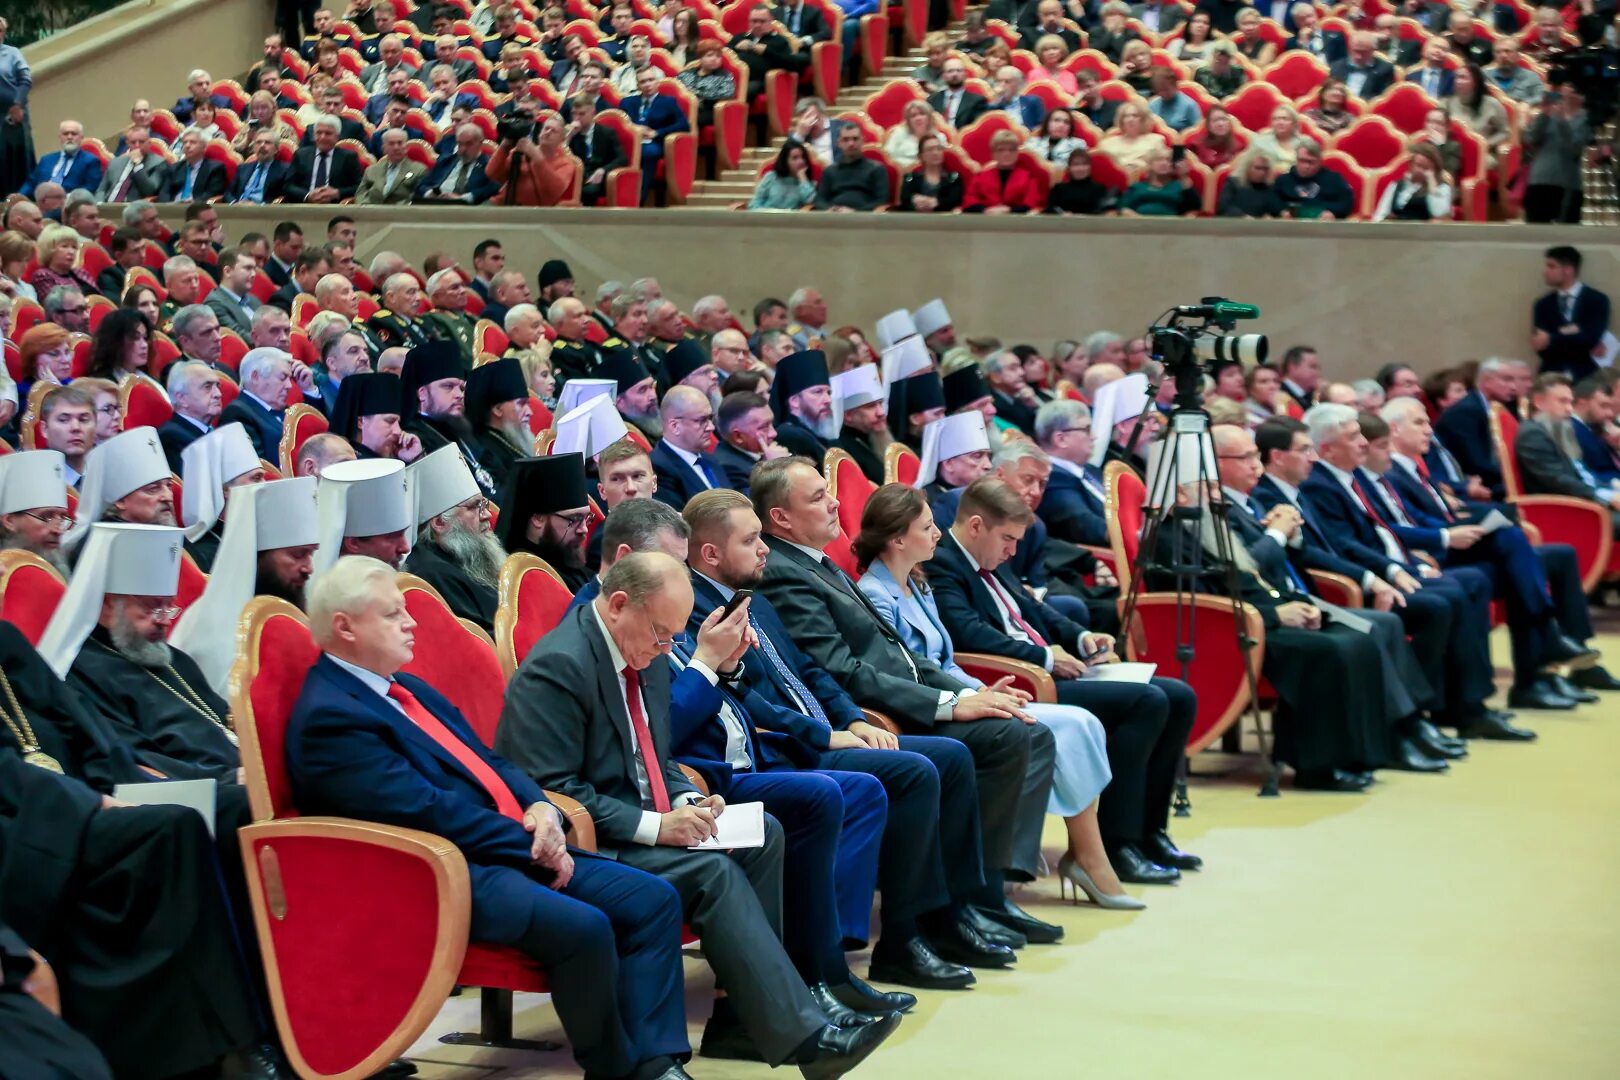 Съезд всемирного русского народного собора